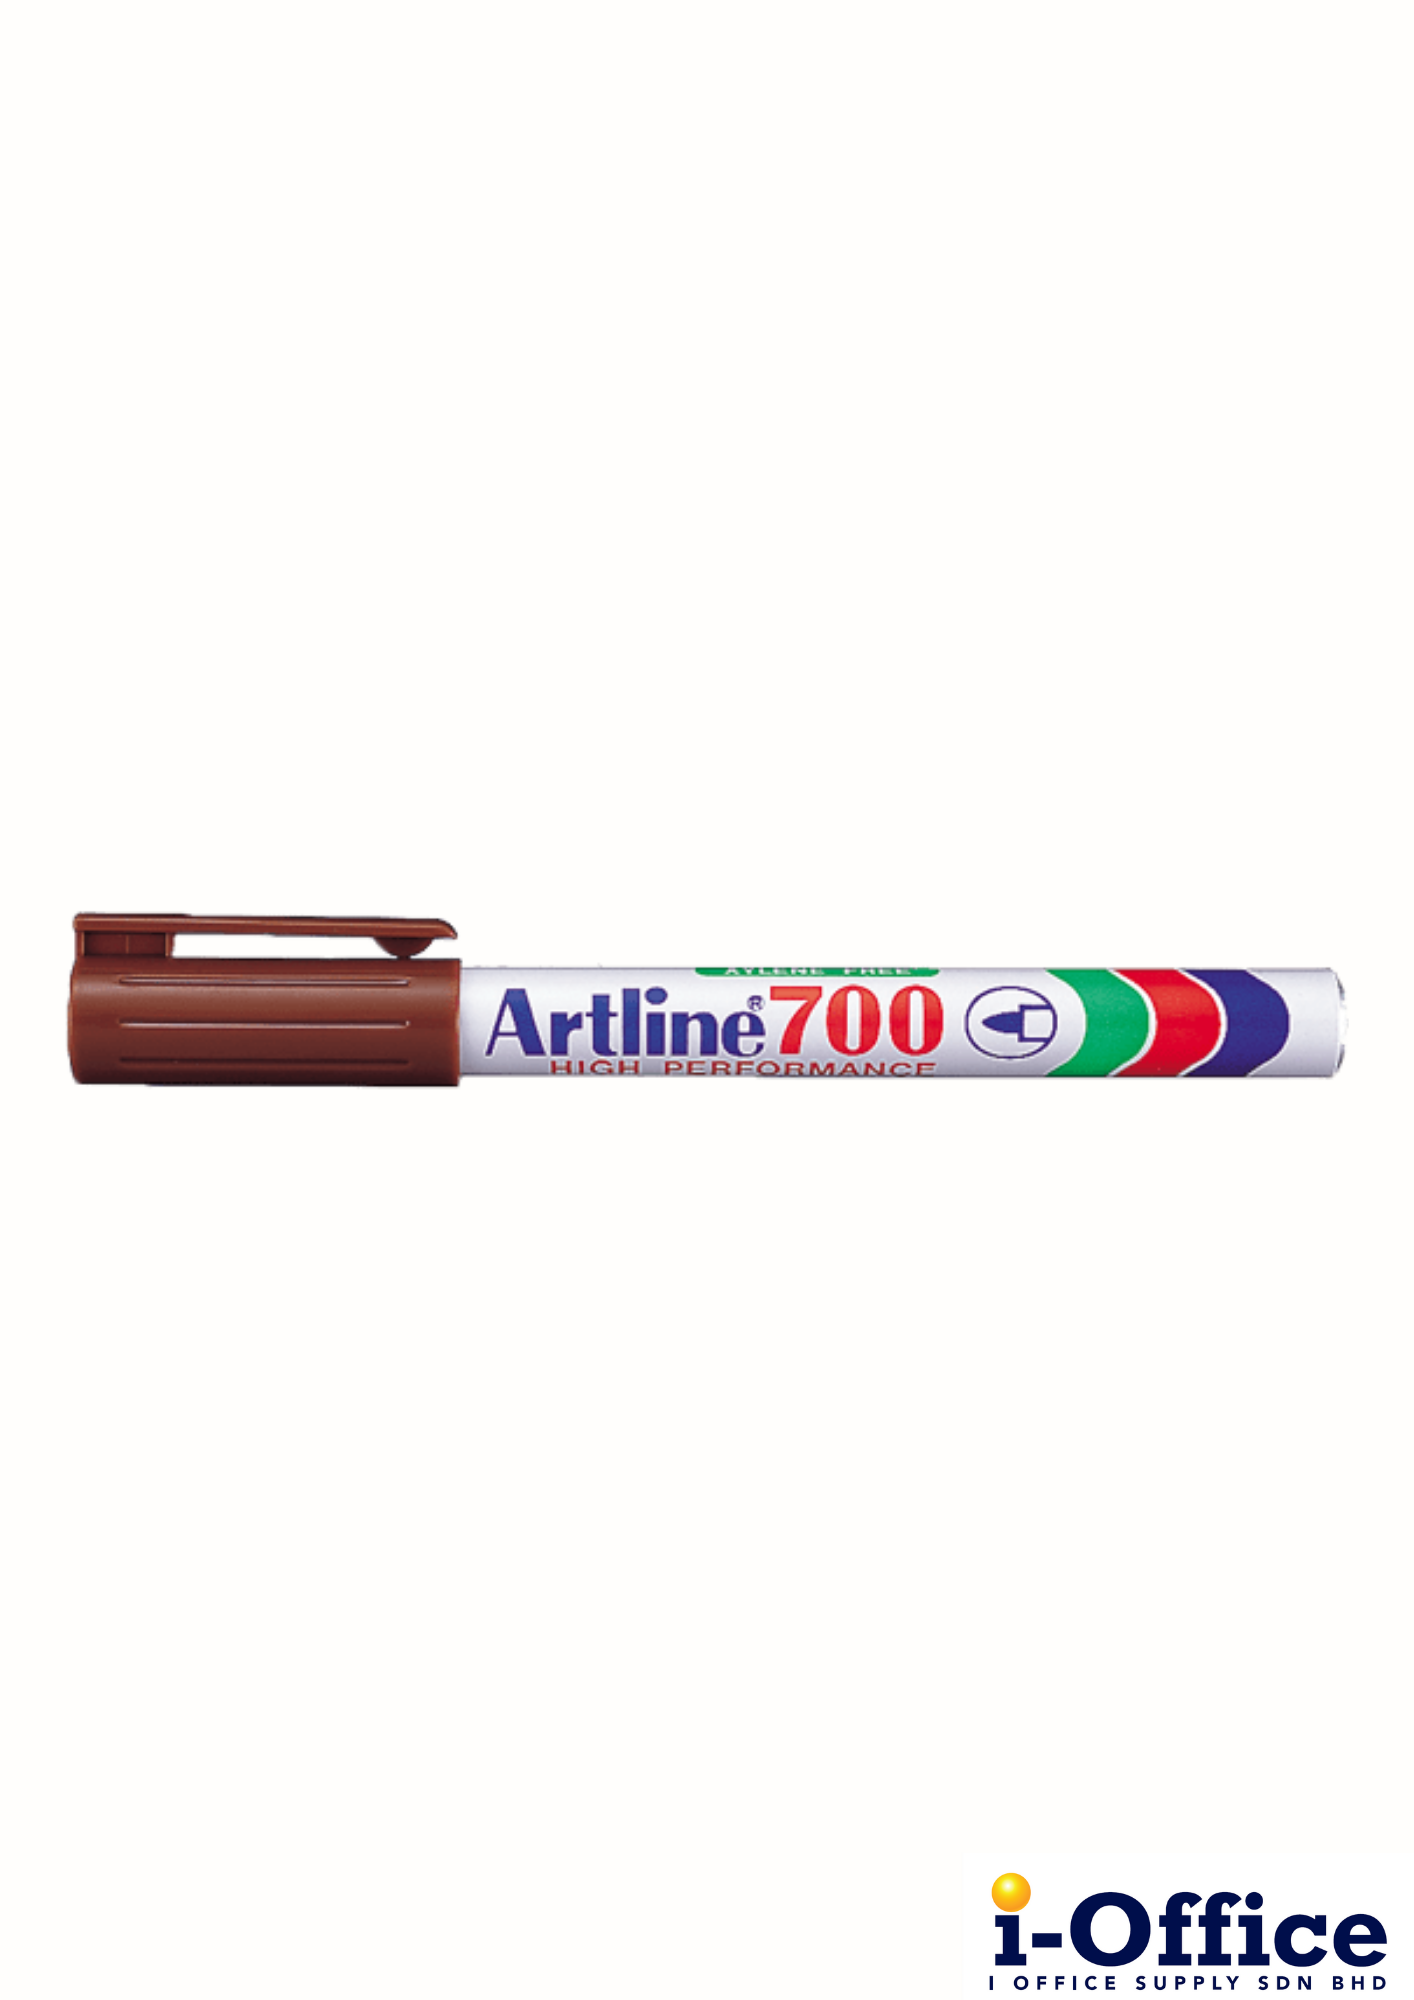 Artline 700 Permanent Marker Pen - Brown